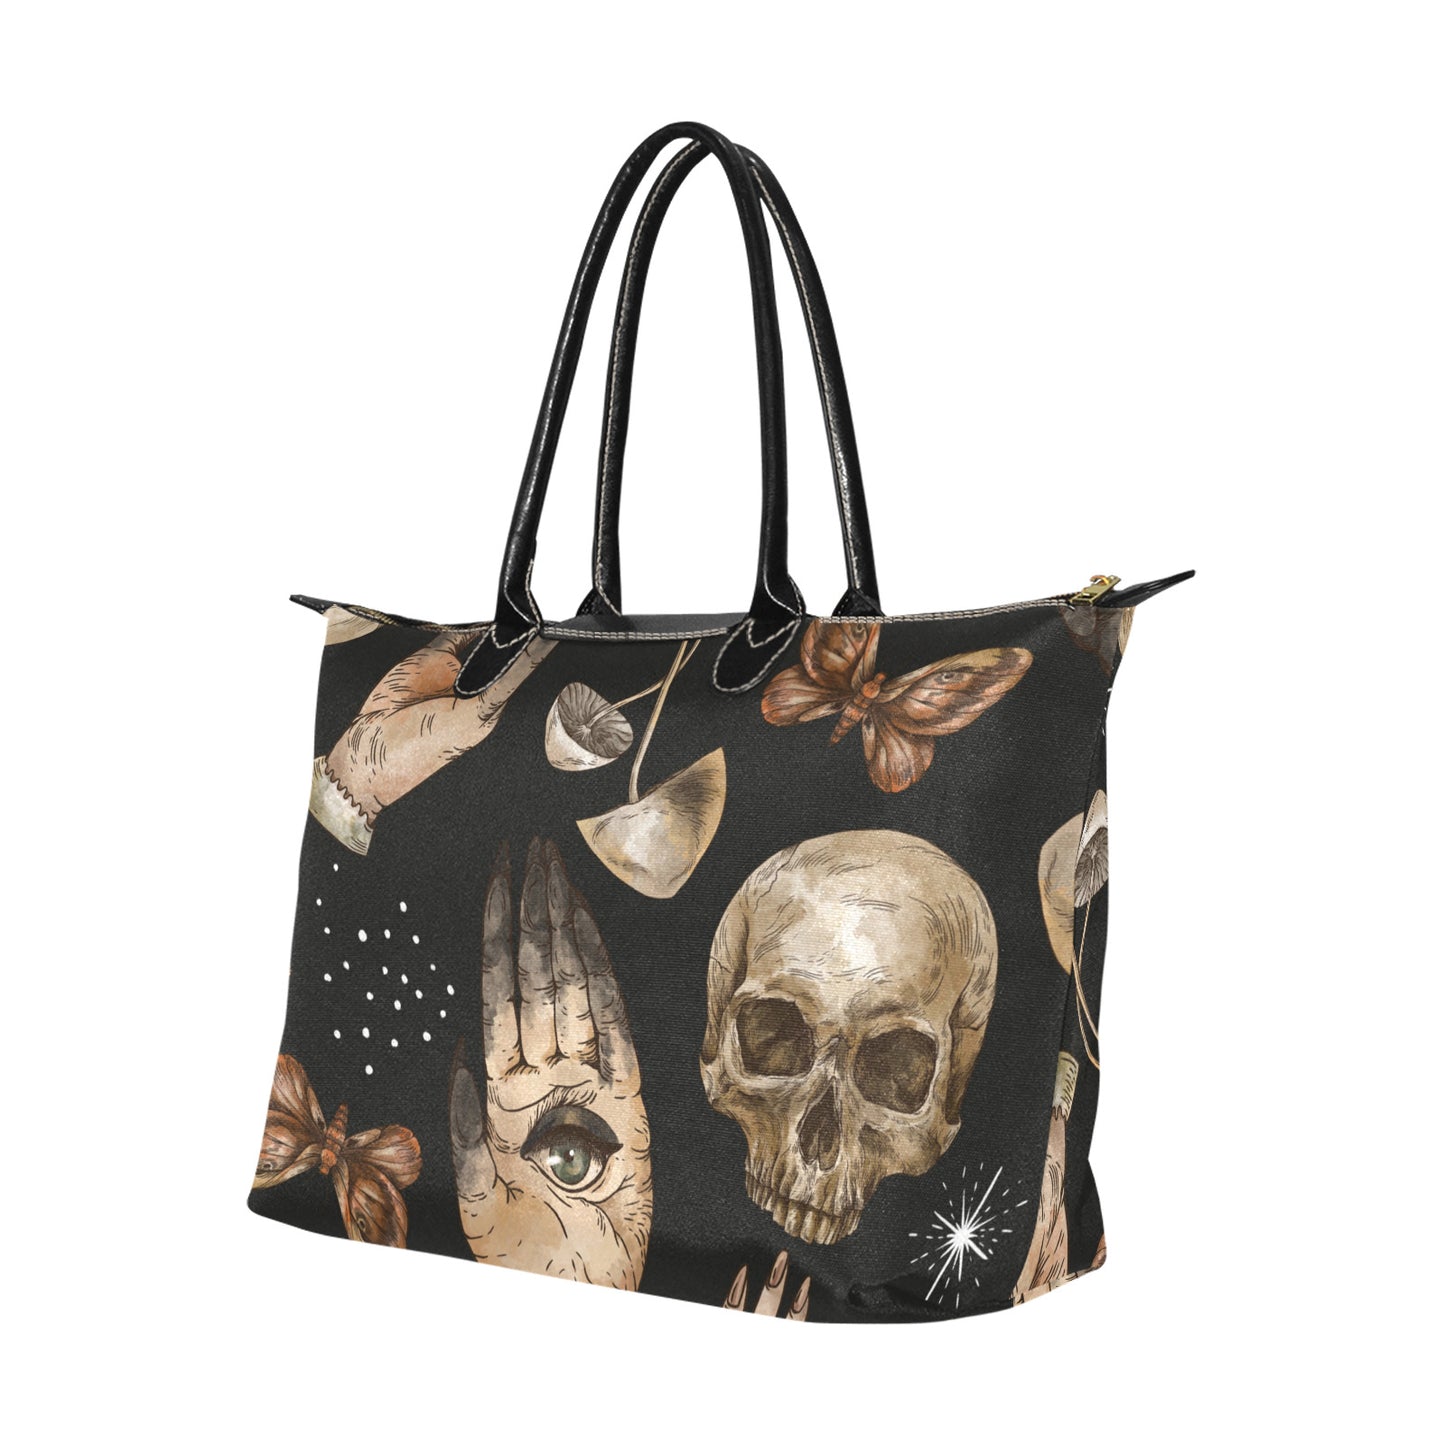 Mushroom Skull witchcraft Women's Classic zip tote Handbag